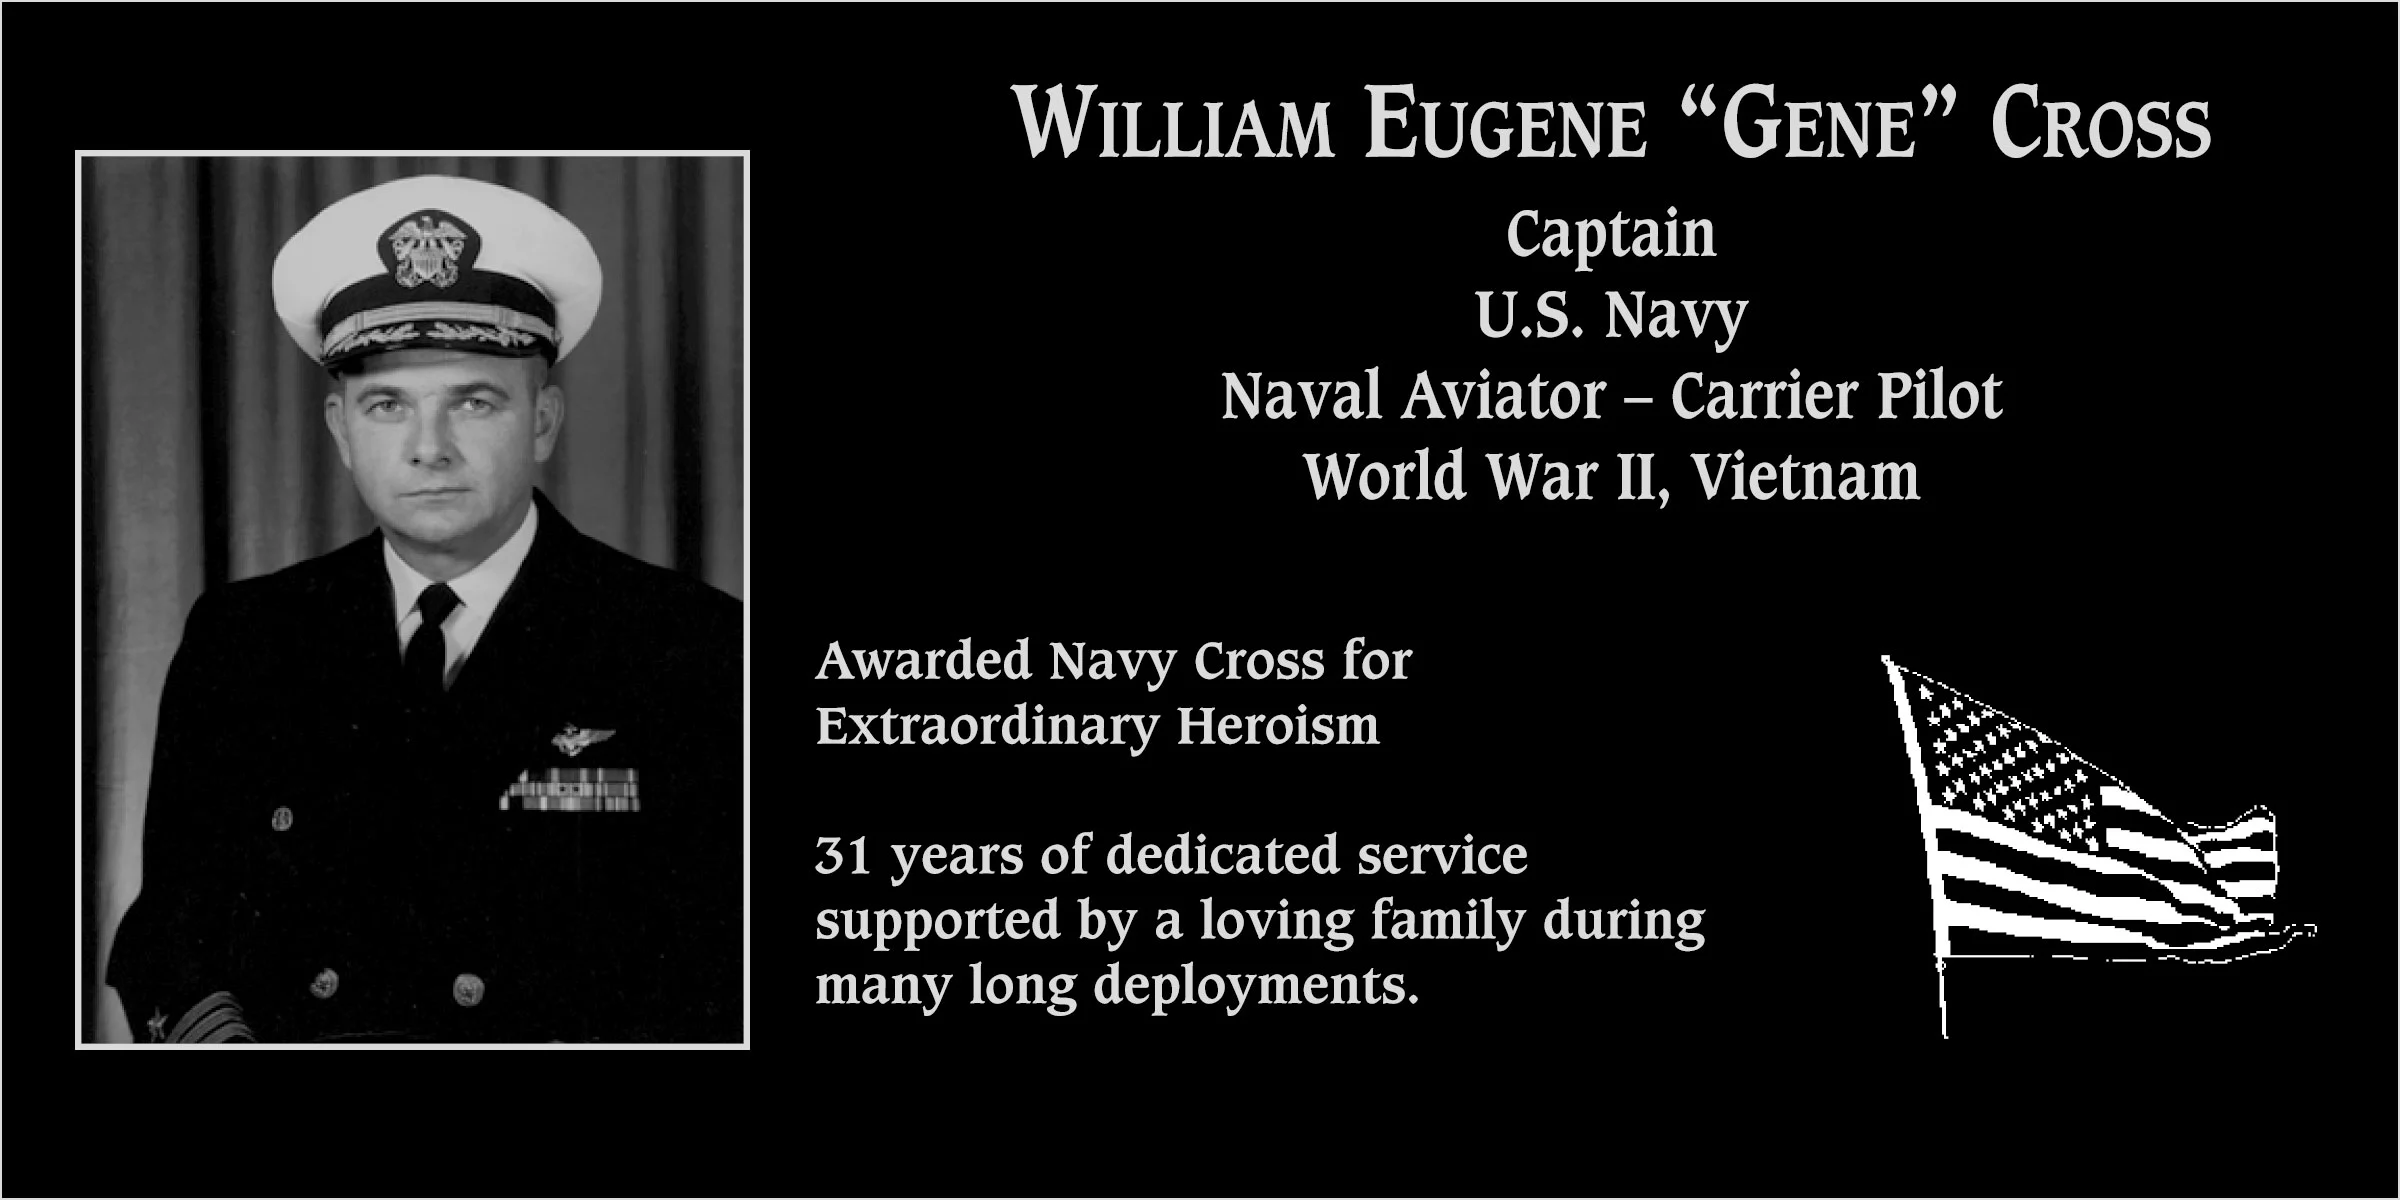 William Eugene “Gene” Cross